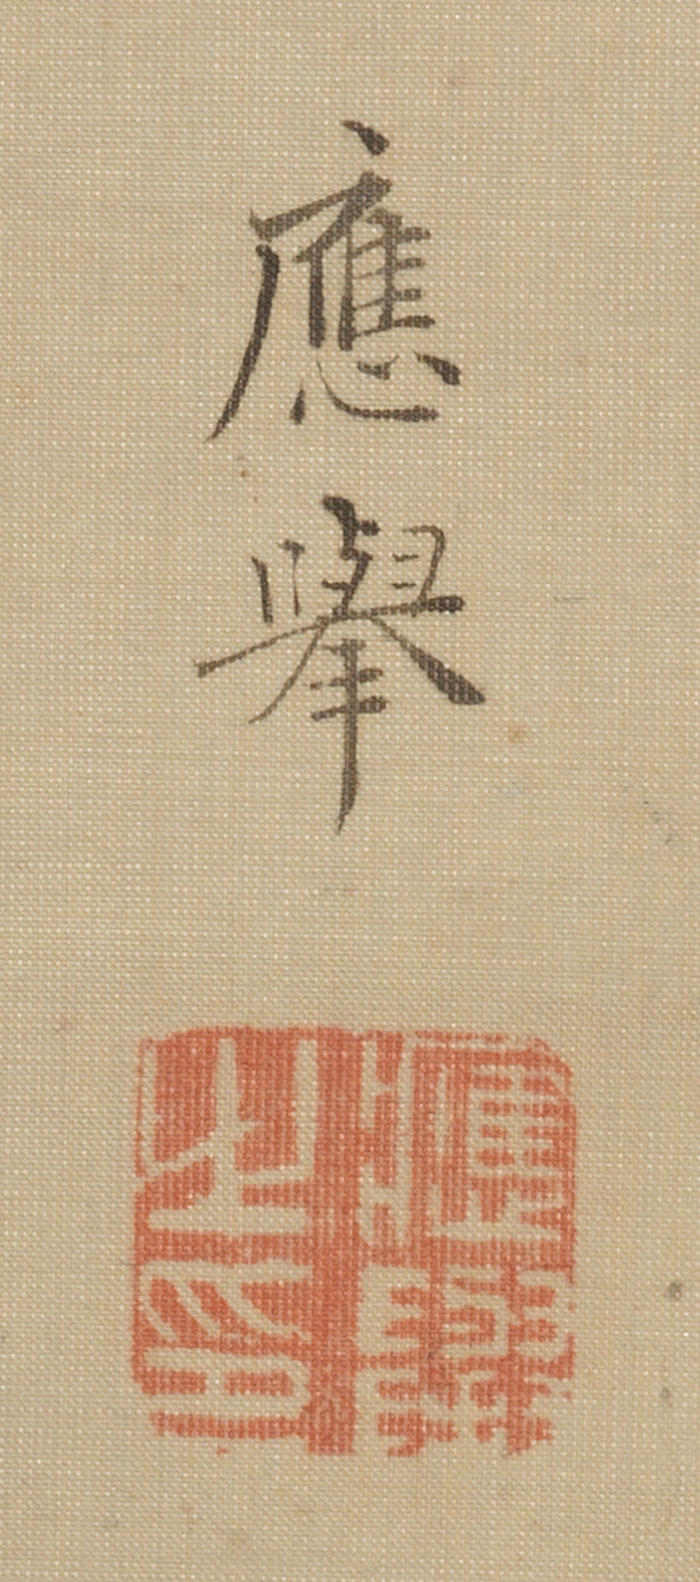 Maruyama Okyo (1733-1795) The Ghost of Oyuki, late 18th century (2)